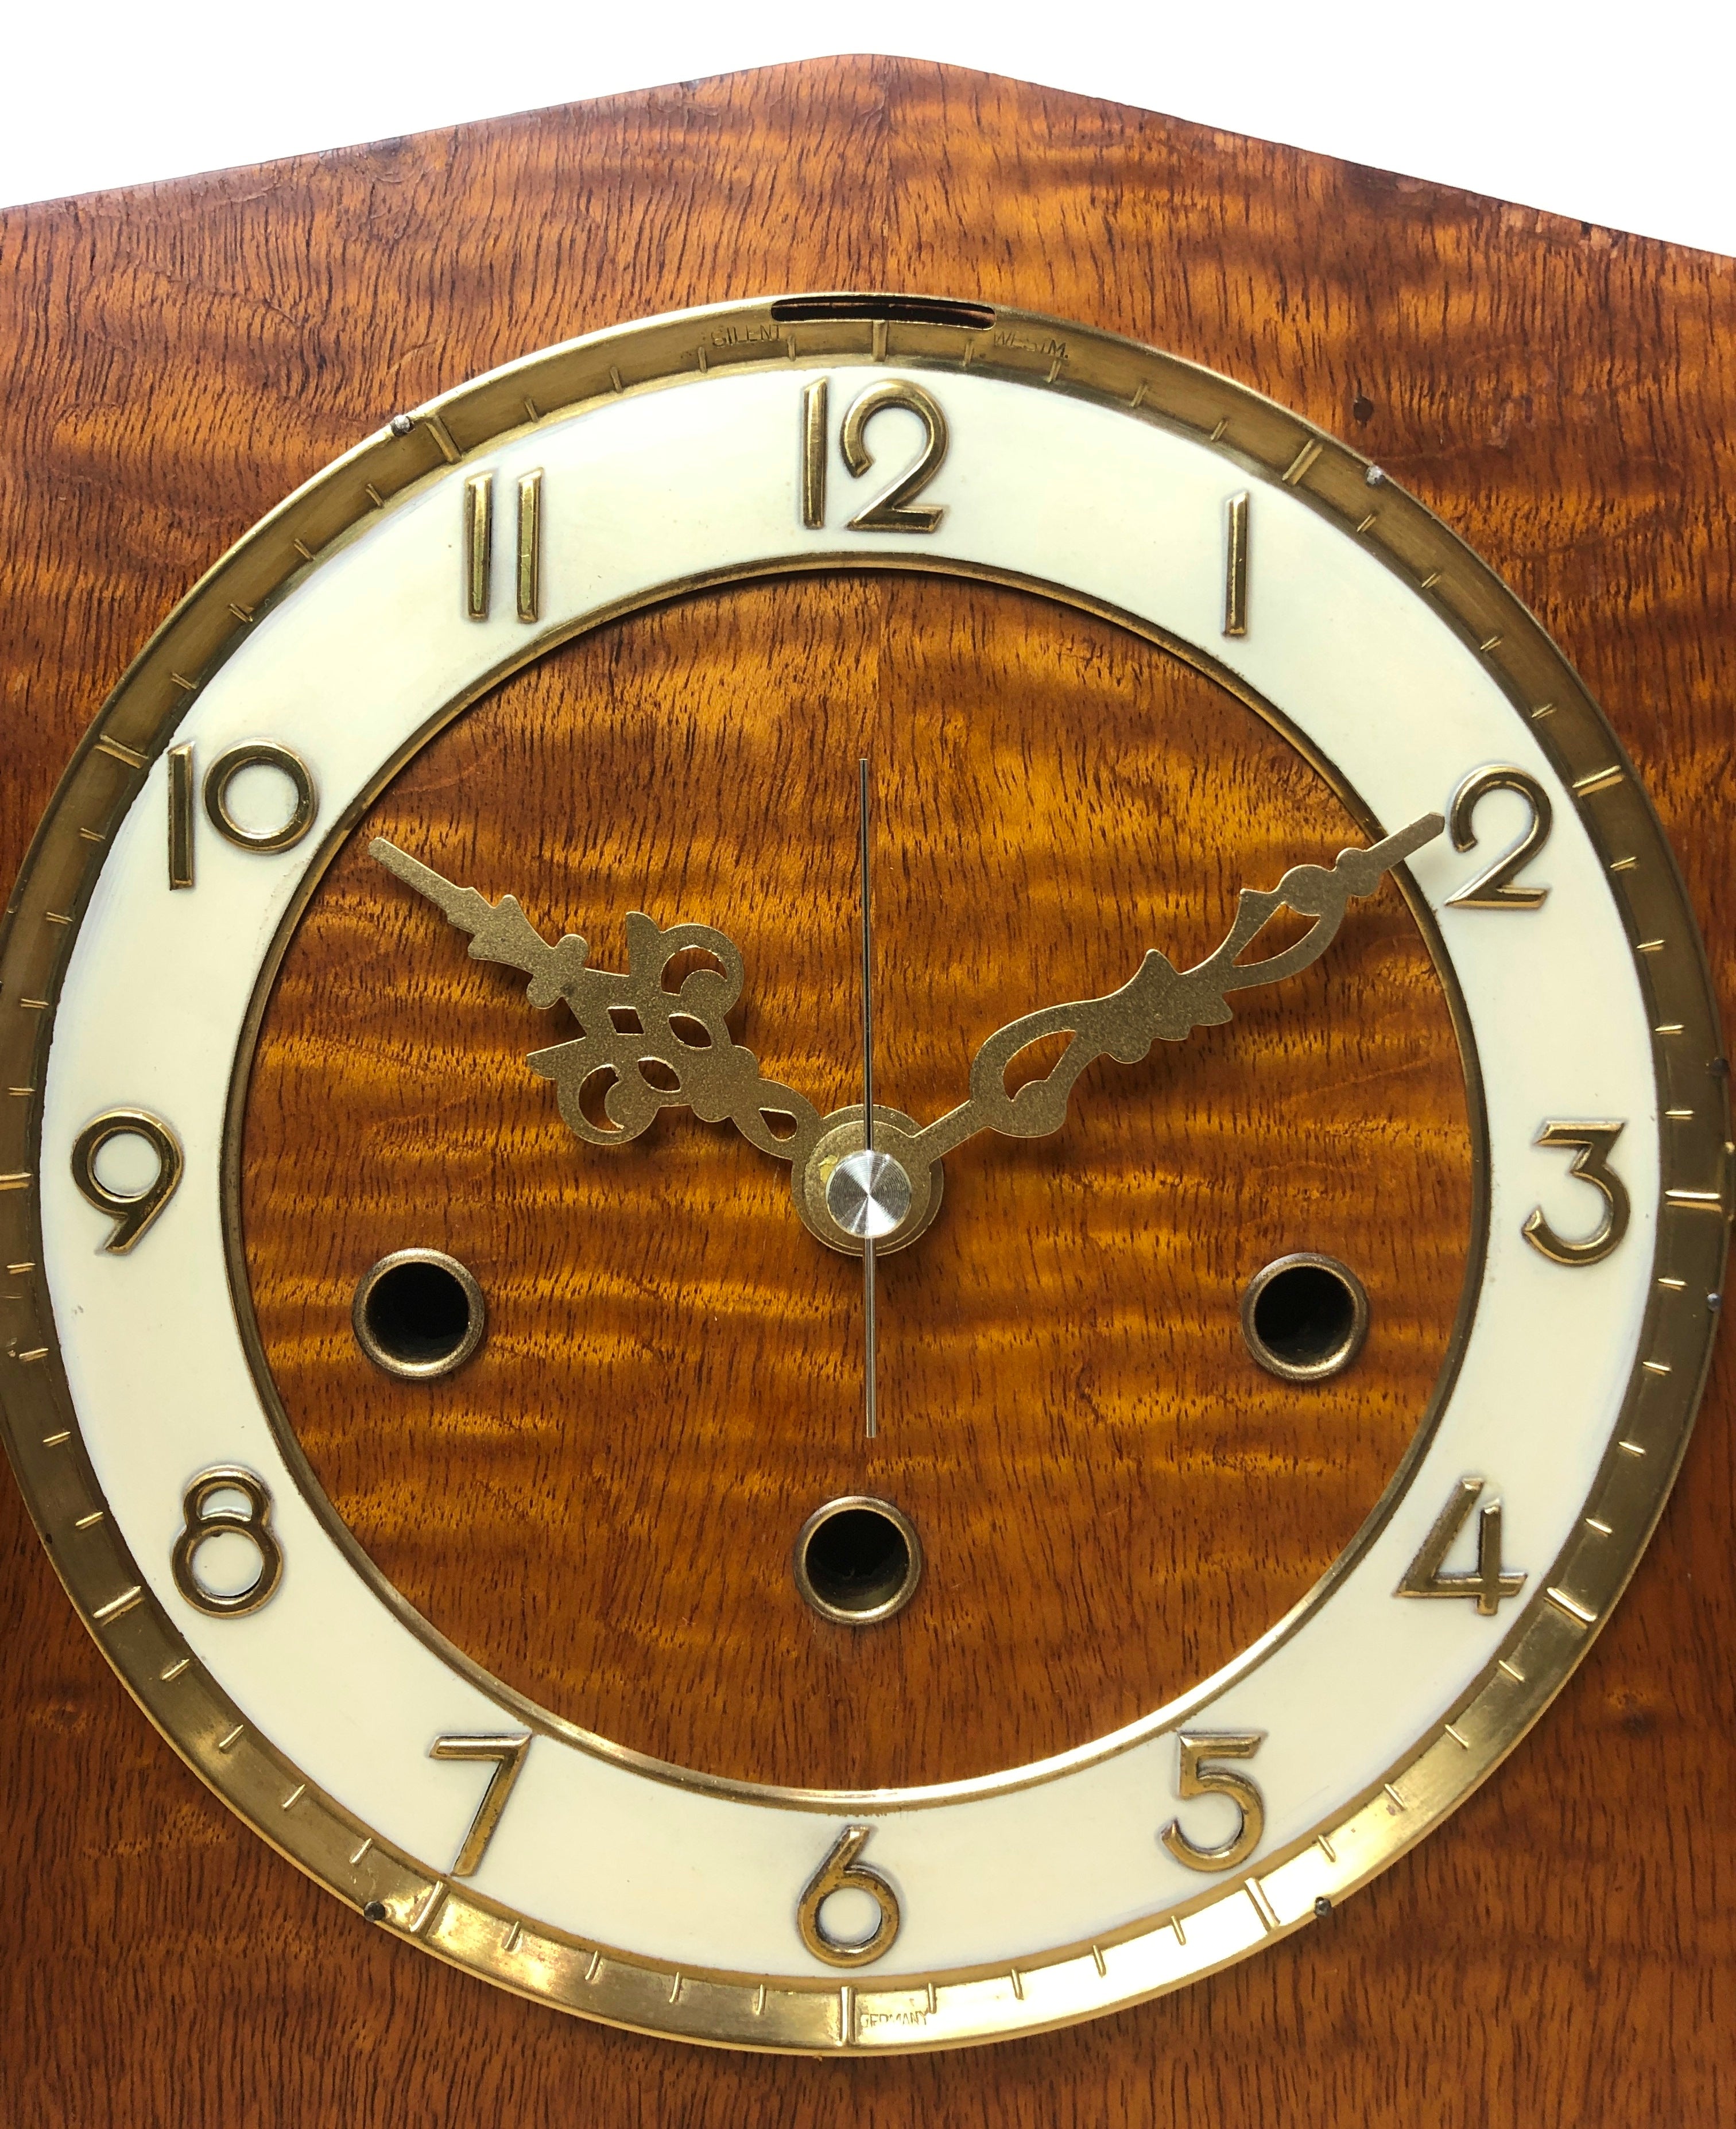 Original Vintage WESTMINSTER Mantel Clock | eXibit collection